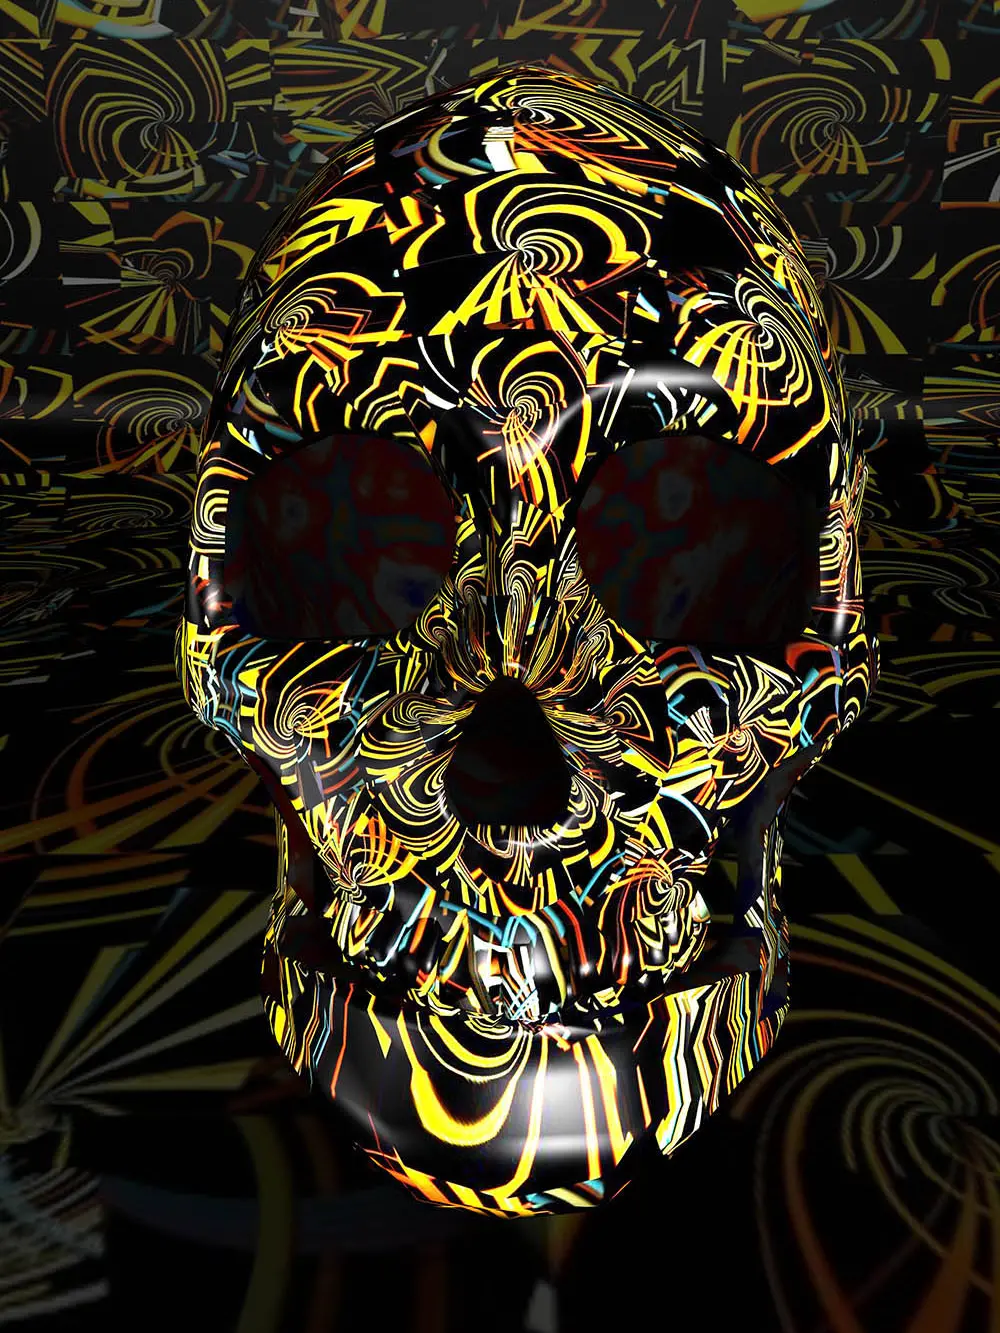 Colorful skull made up of irregular shapes